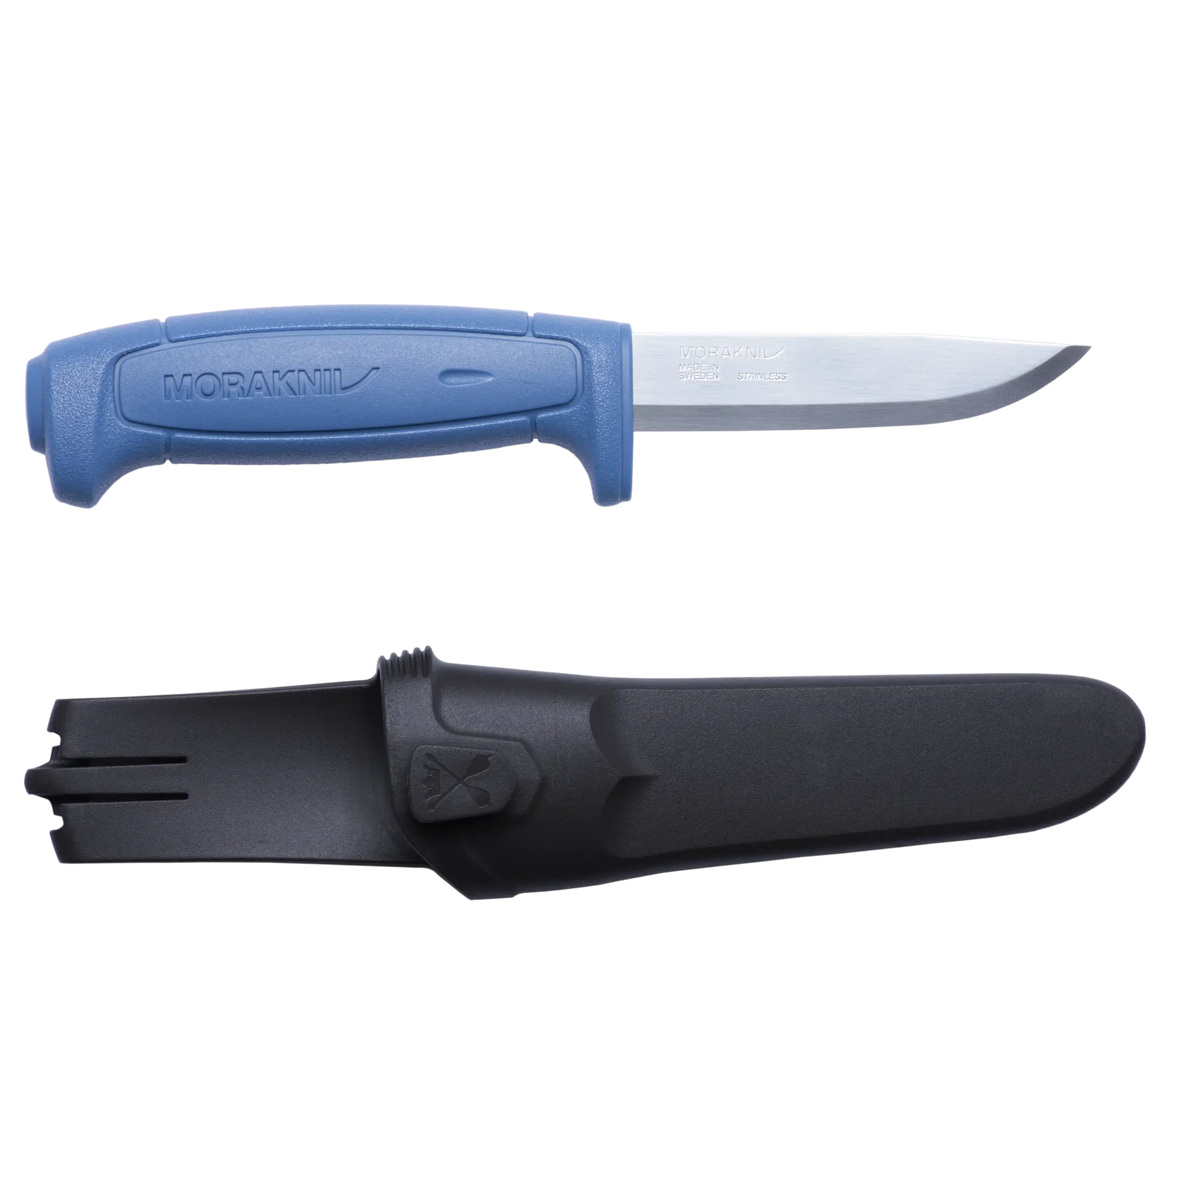 Mora Garberg VS Condor Terrasaur Which is Best? KnifeCenter